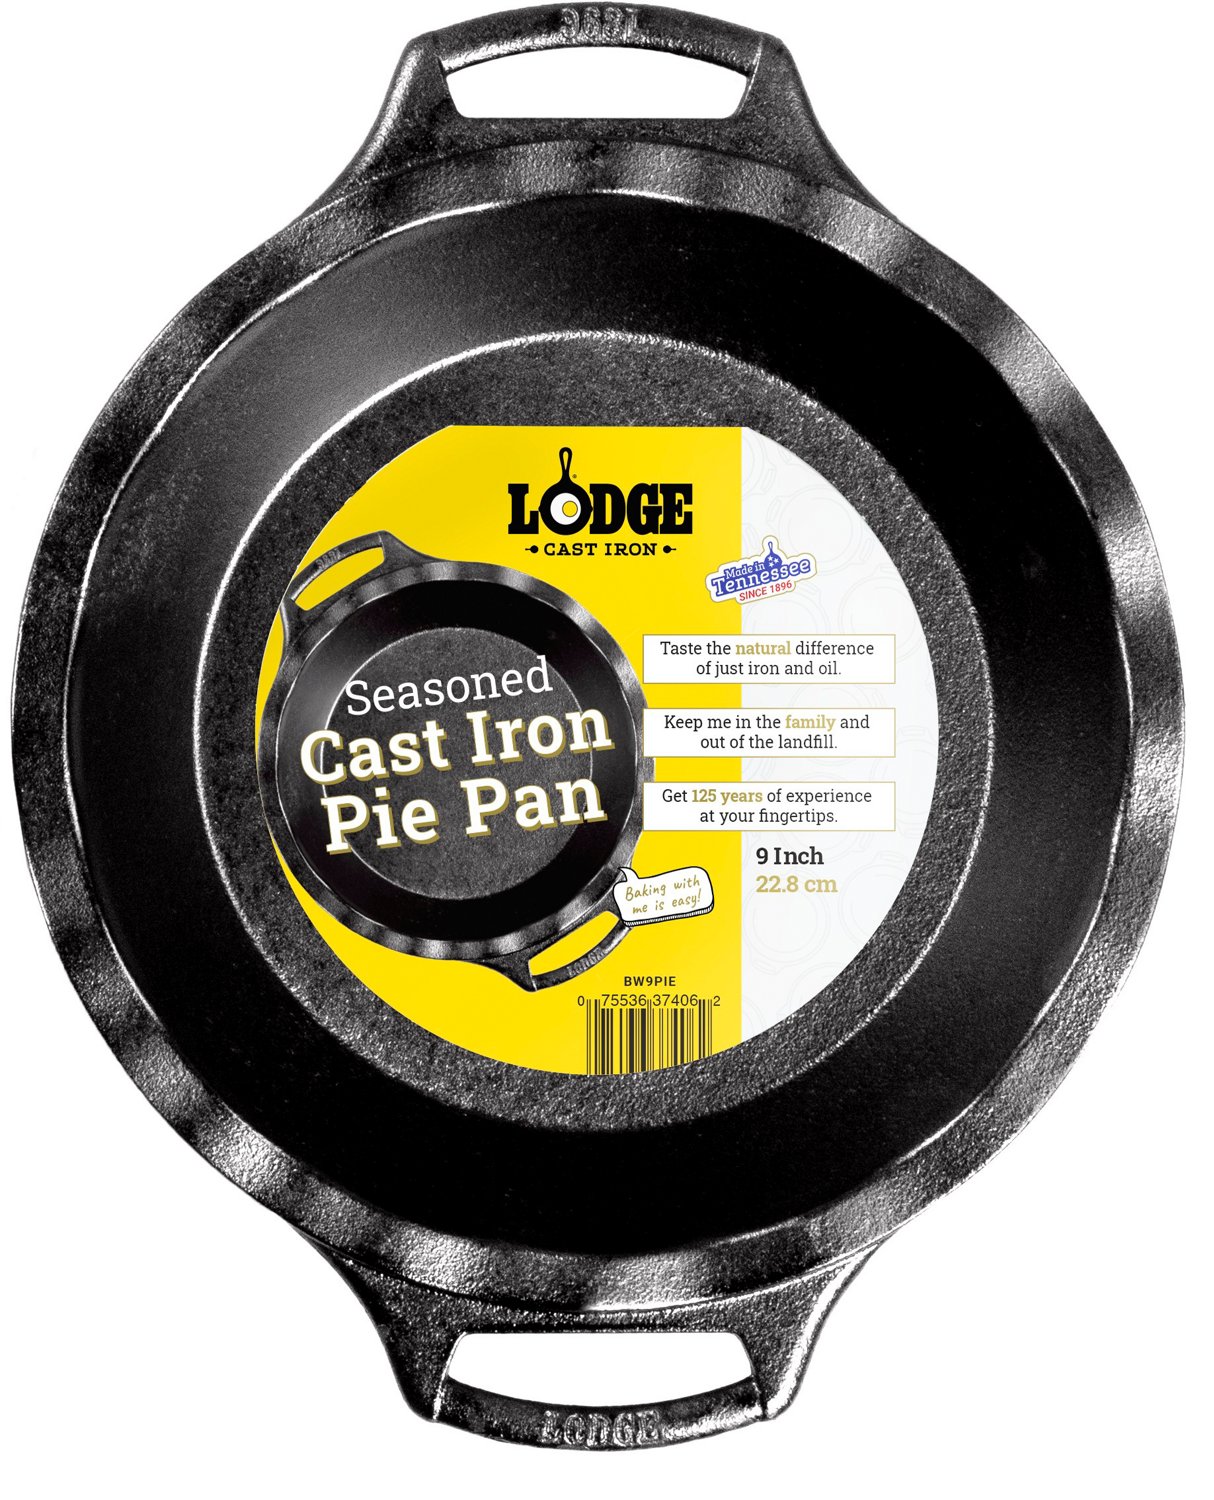  Lodge Cast Iron Pie Pan 9 Inch: Home & Kitchen